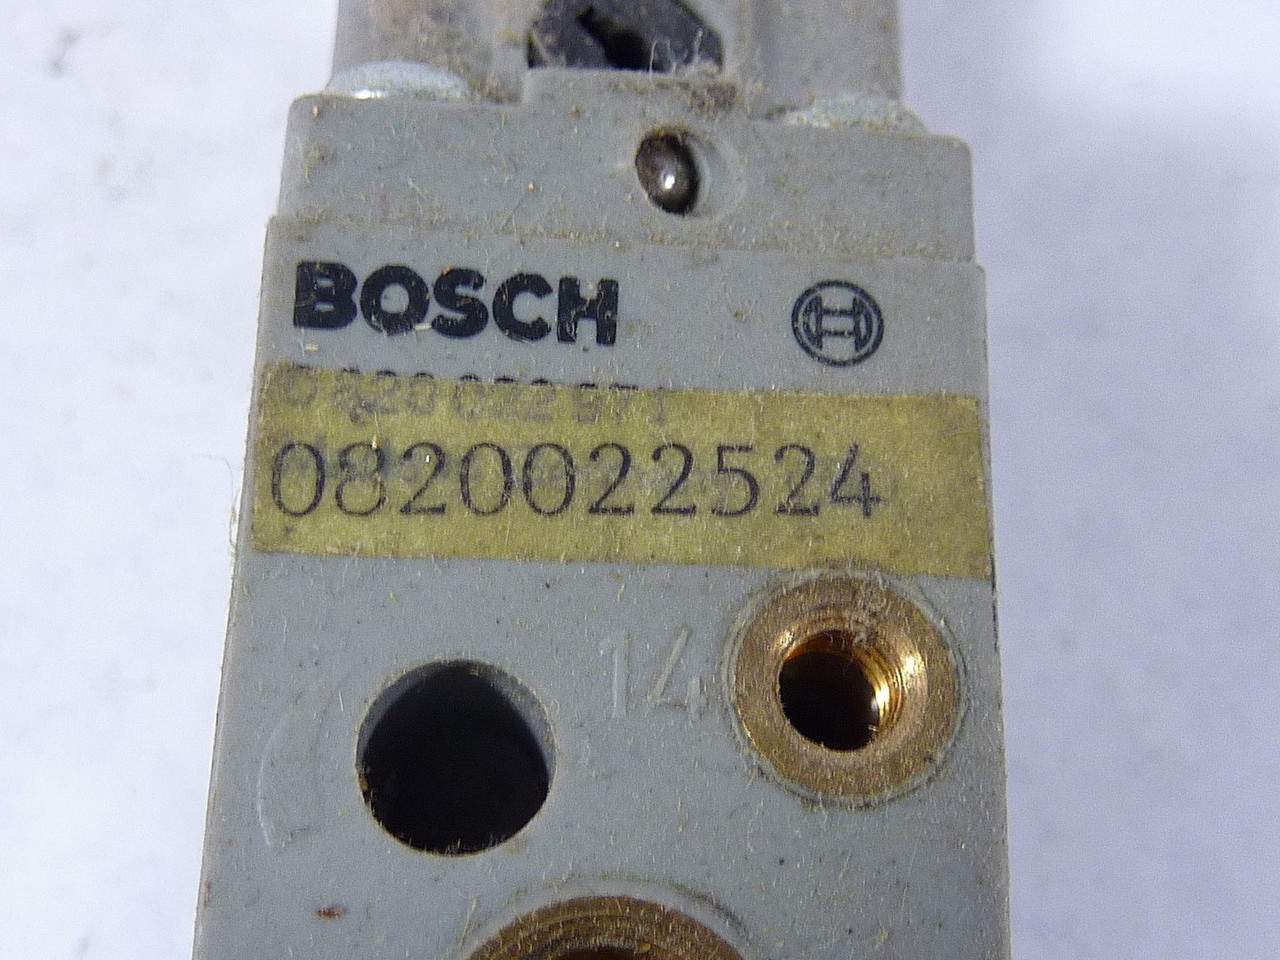 Bosch 0820022524 Solenoid Valve USED